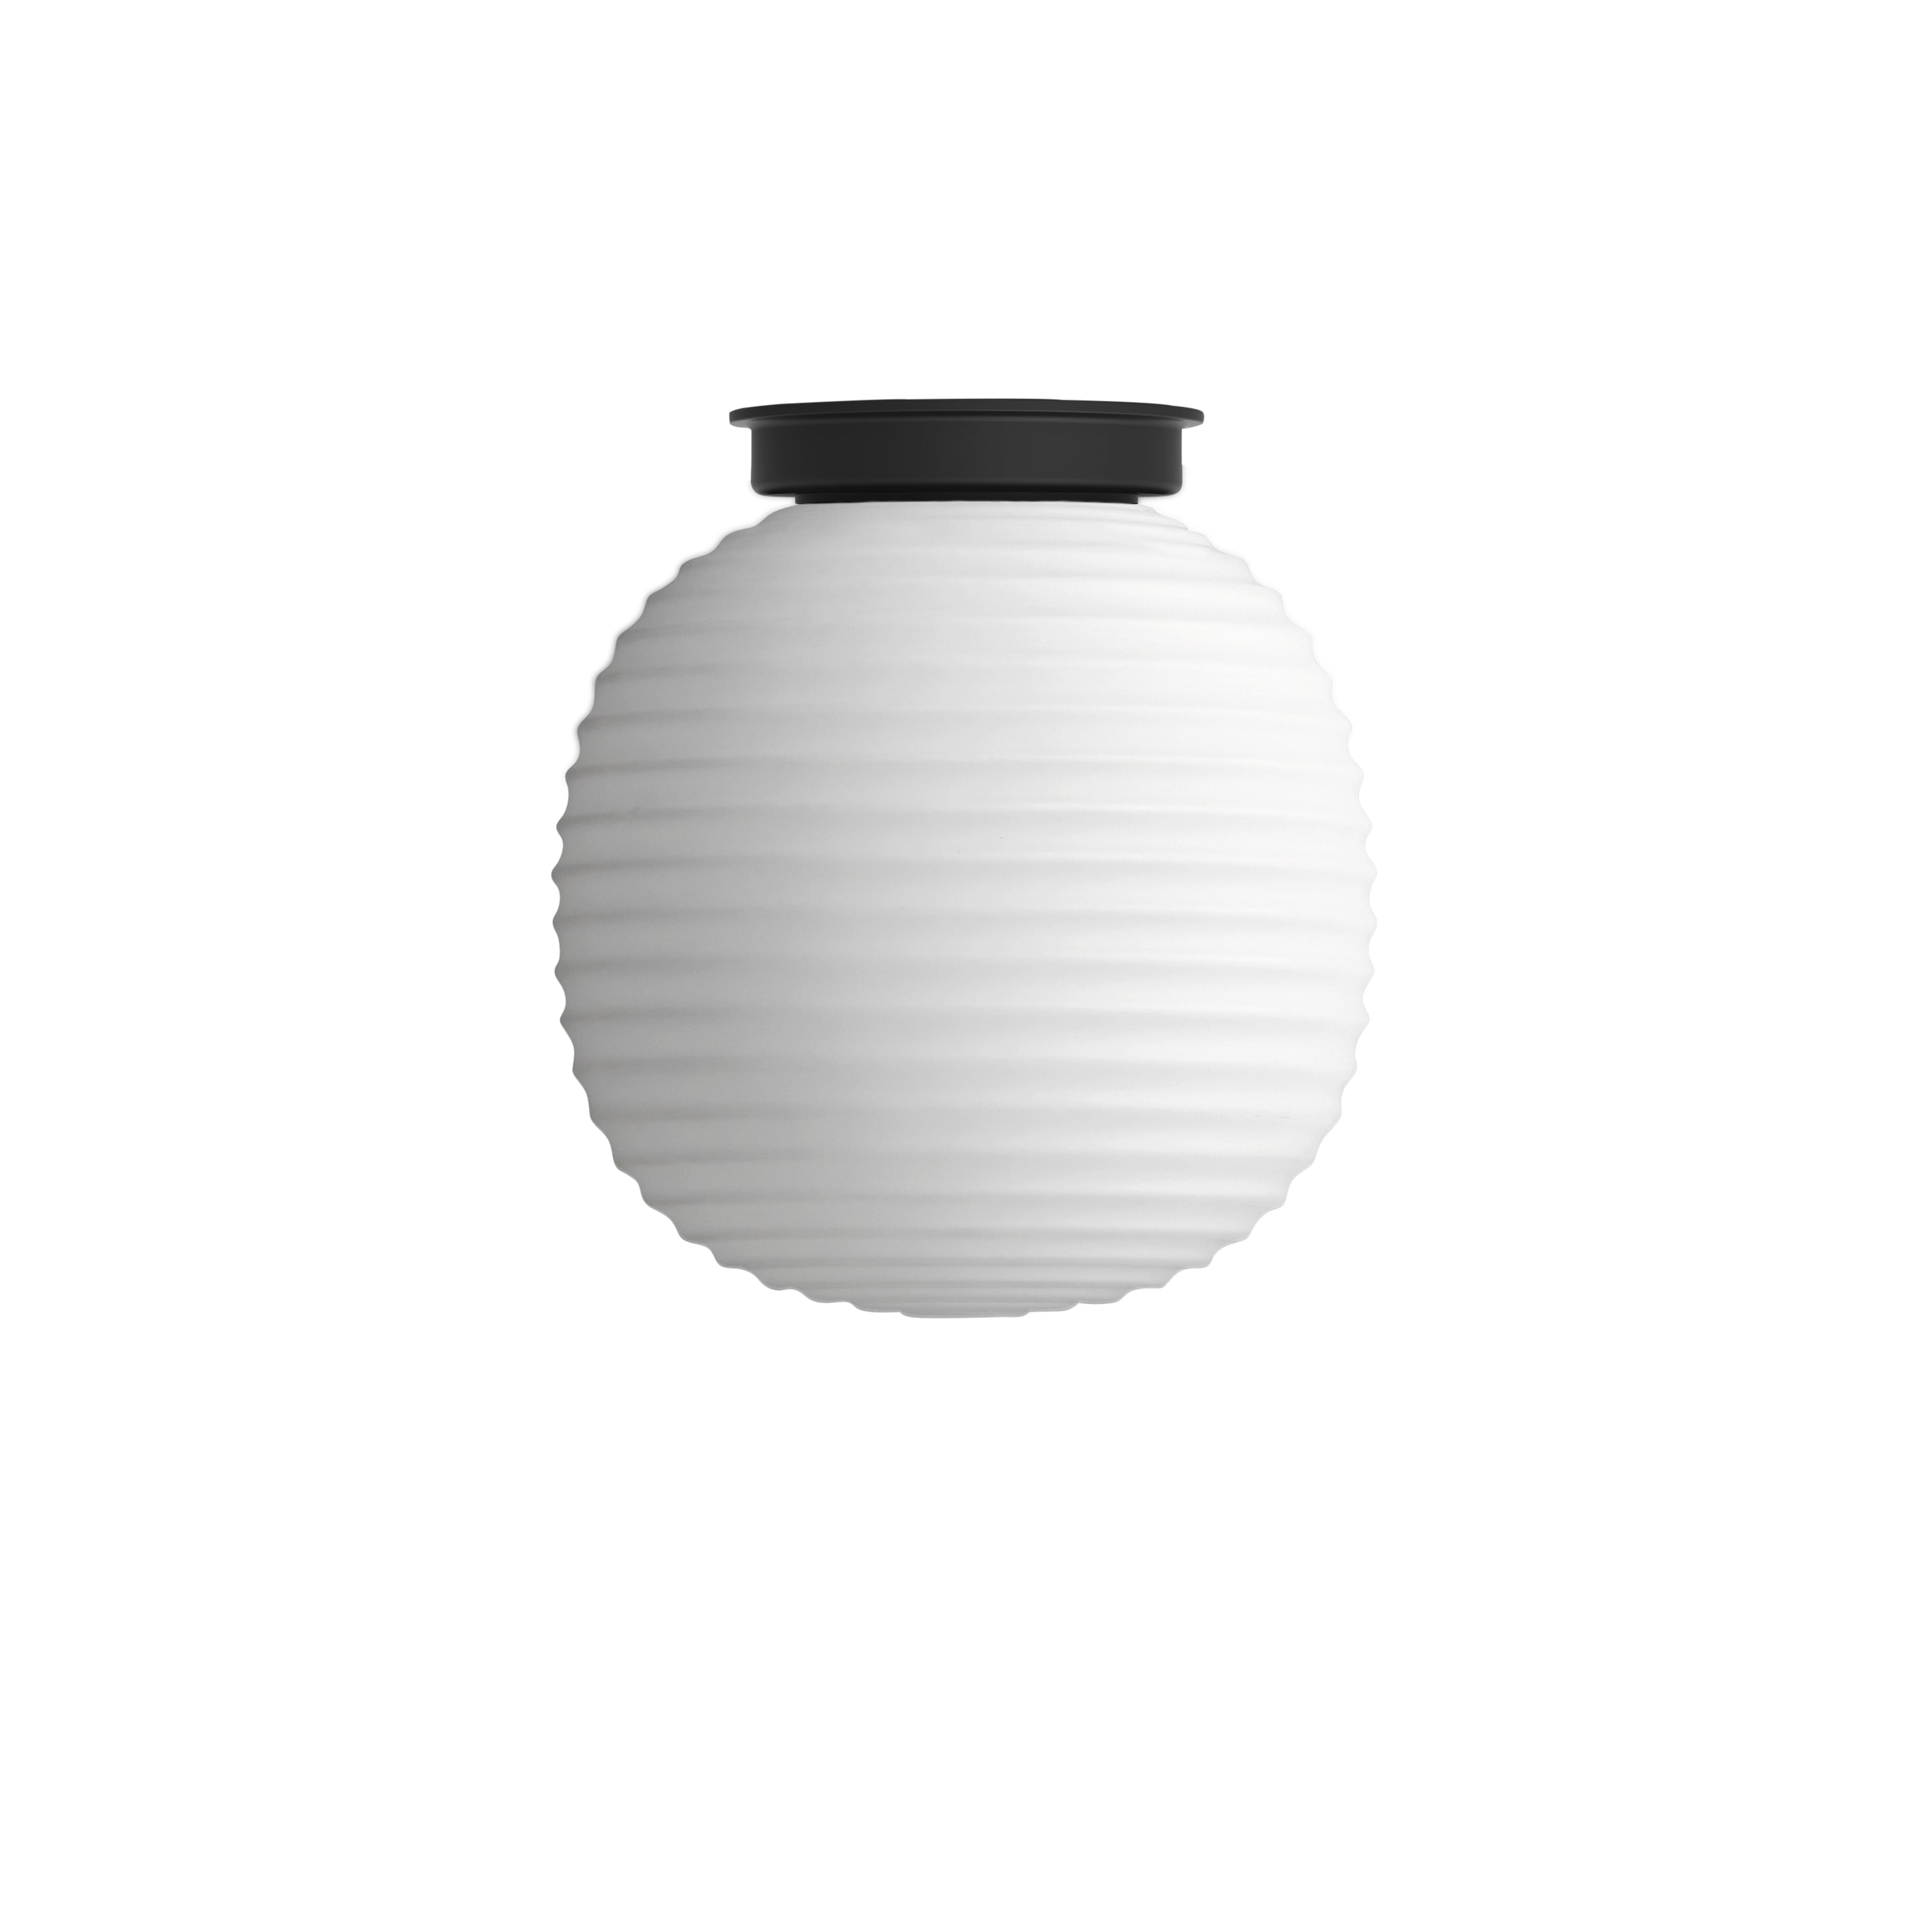 Lantern Ceiling Lamp: Small - 7.9